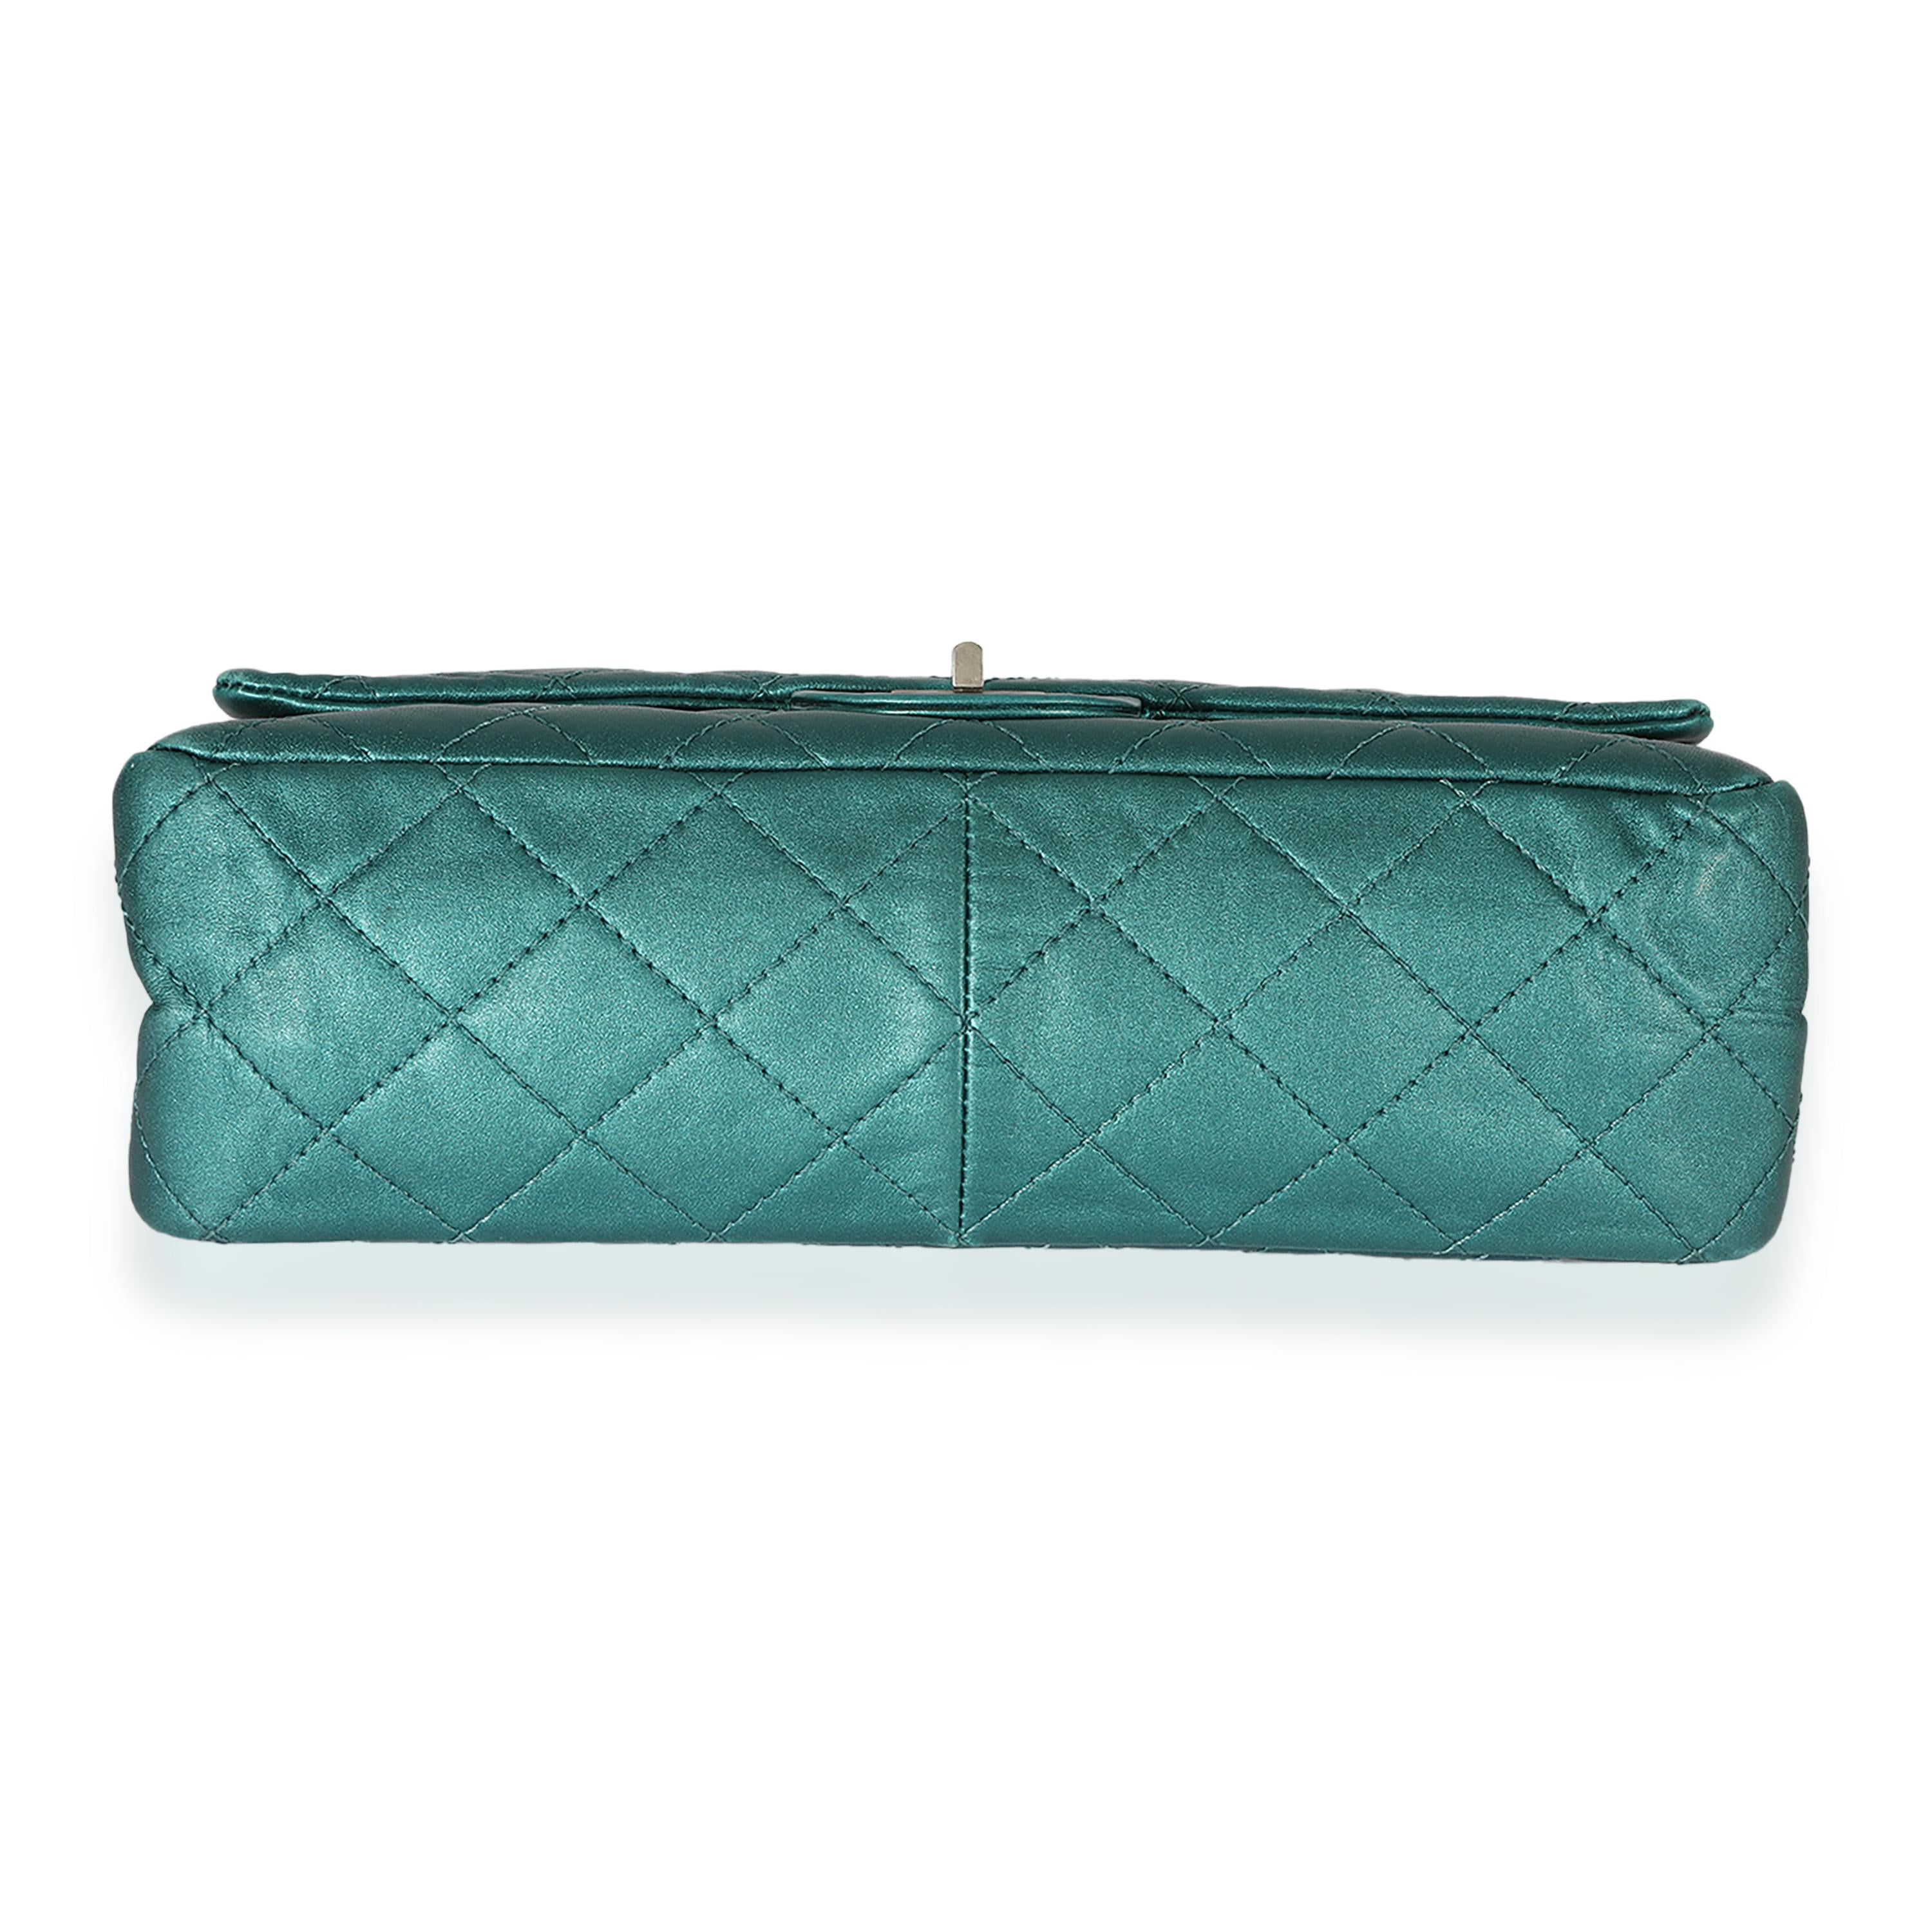 Chanel Green Metallic Leather 2.55 227 Reissue Flap Bag 3